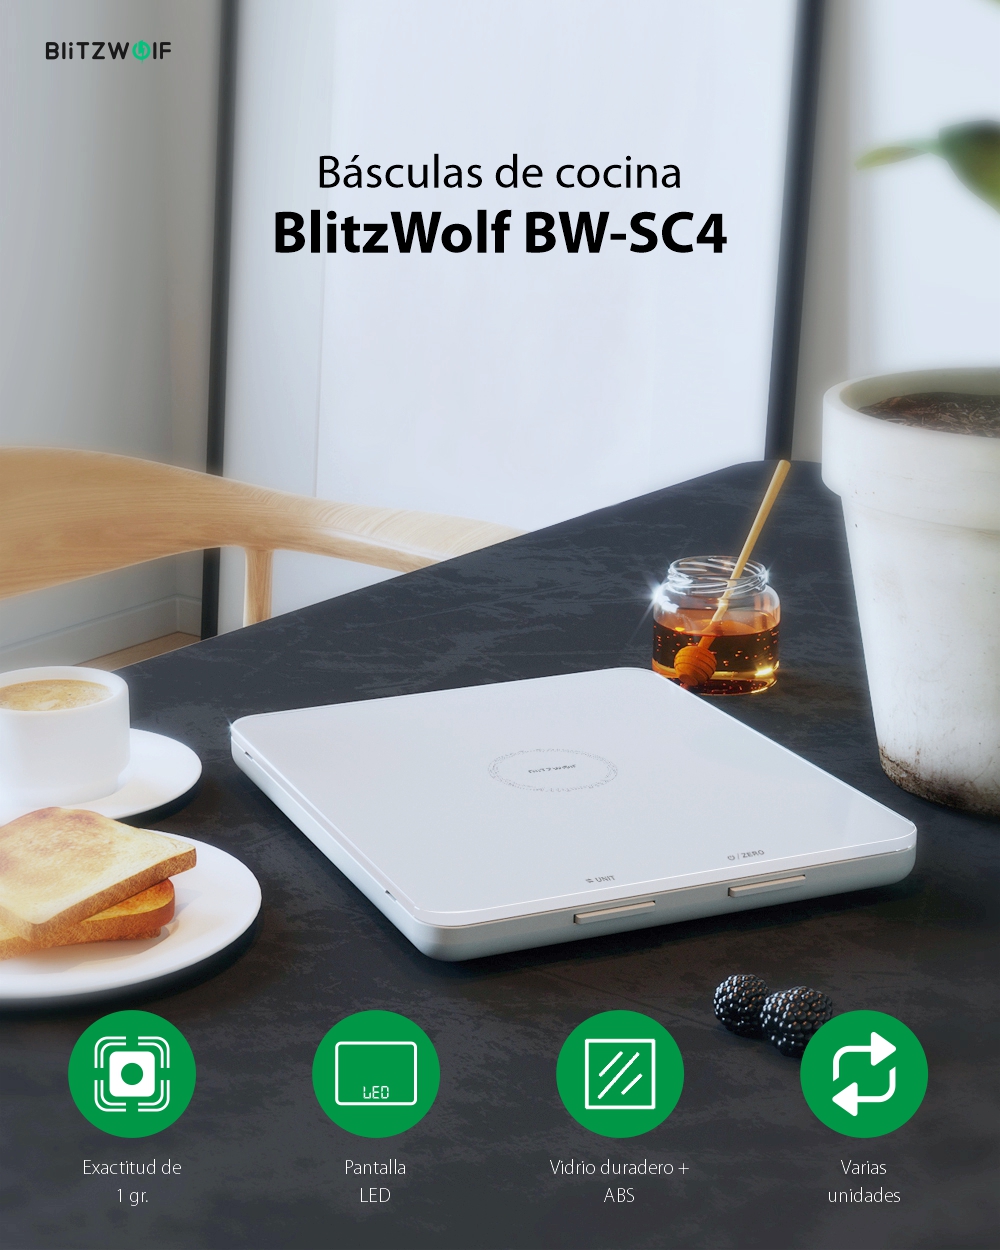 Báscula de cocina BlitzWolf BW-SC4, Inteligente, Pantalla LED, Cristal de seguridad, Capacidad 5 kg